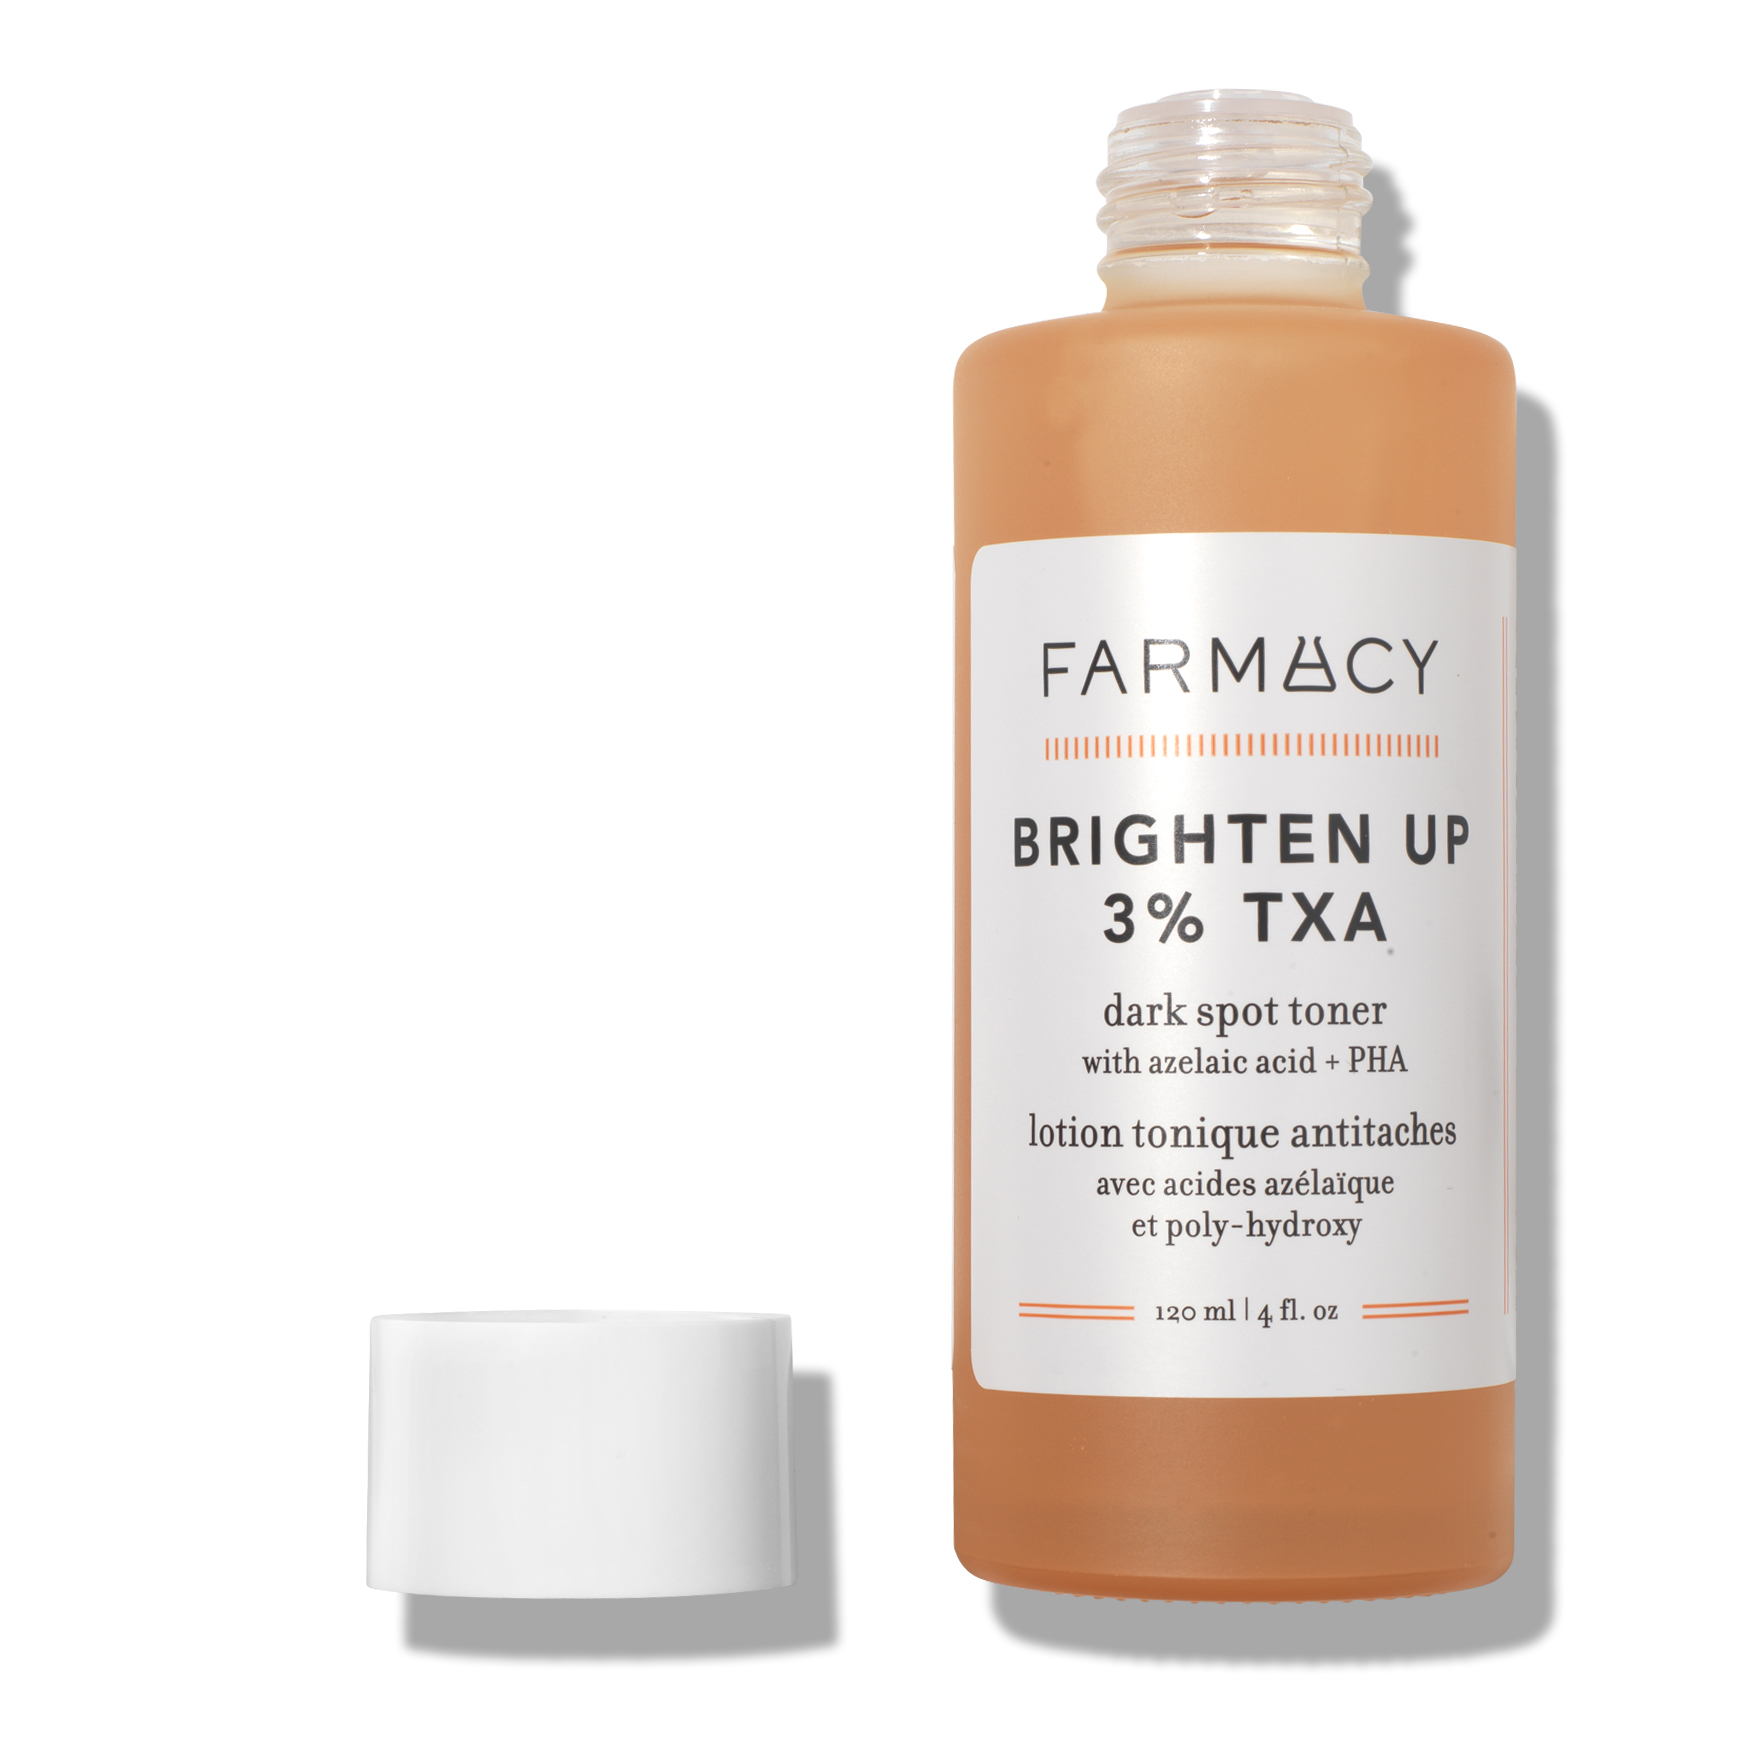 Farmacy Beauty Brighten Up 3% TXA Dark Spot Toner | Space NK